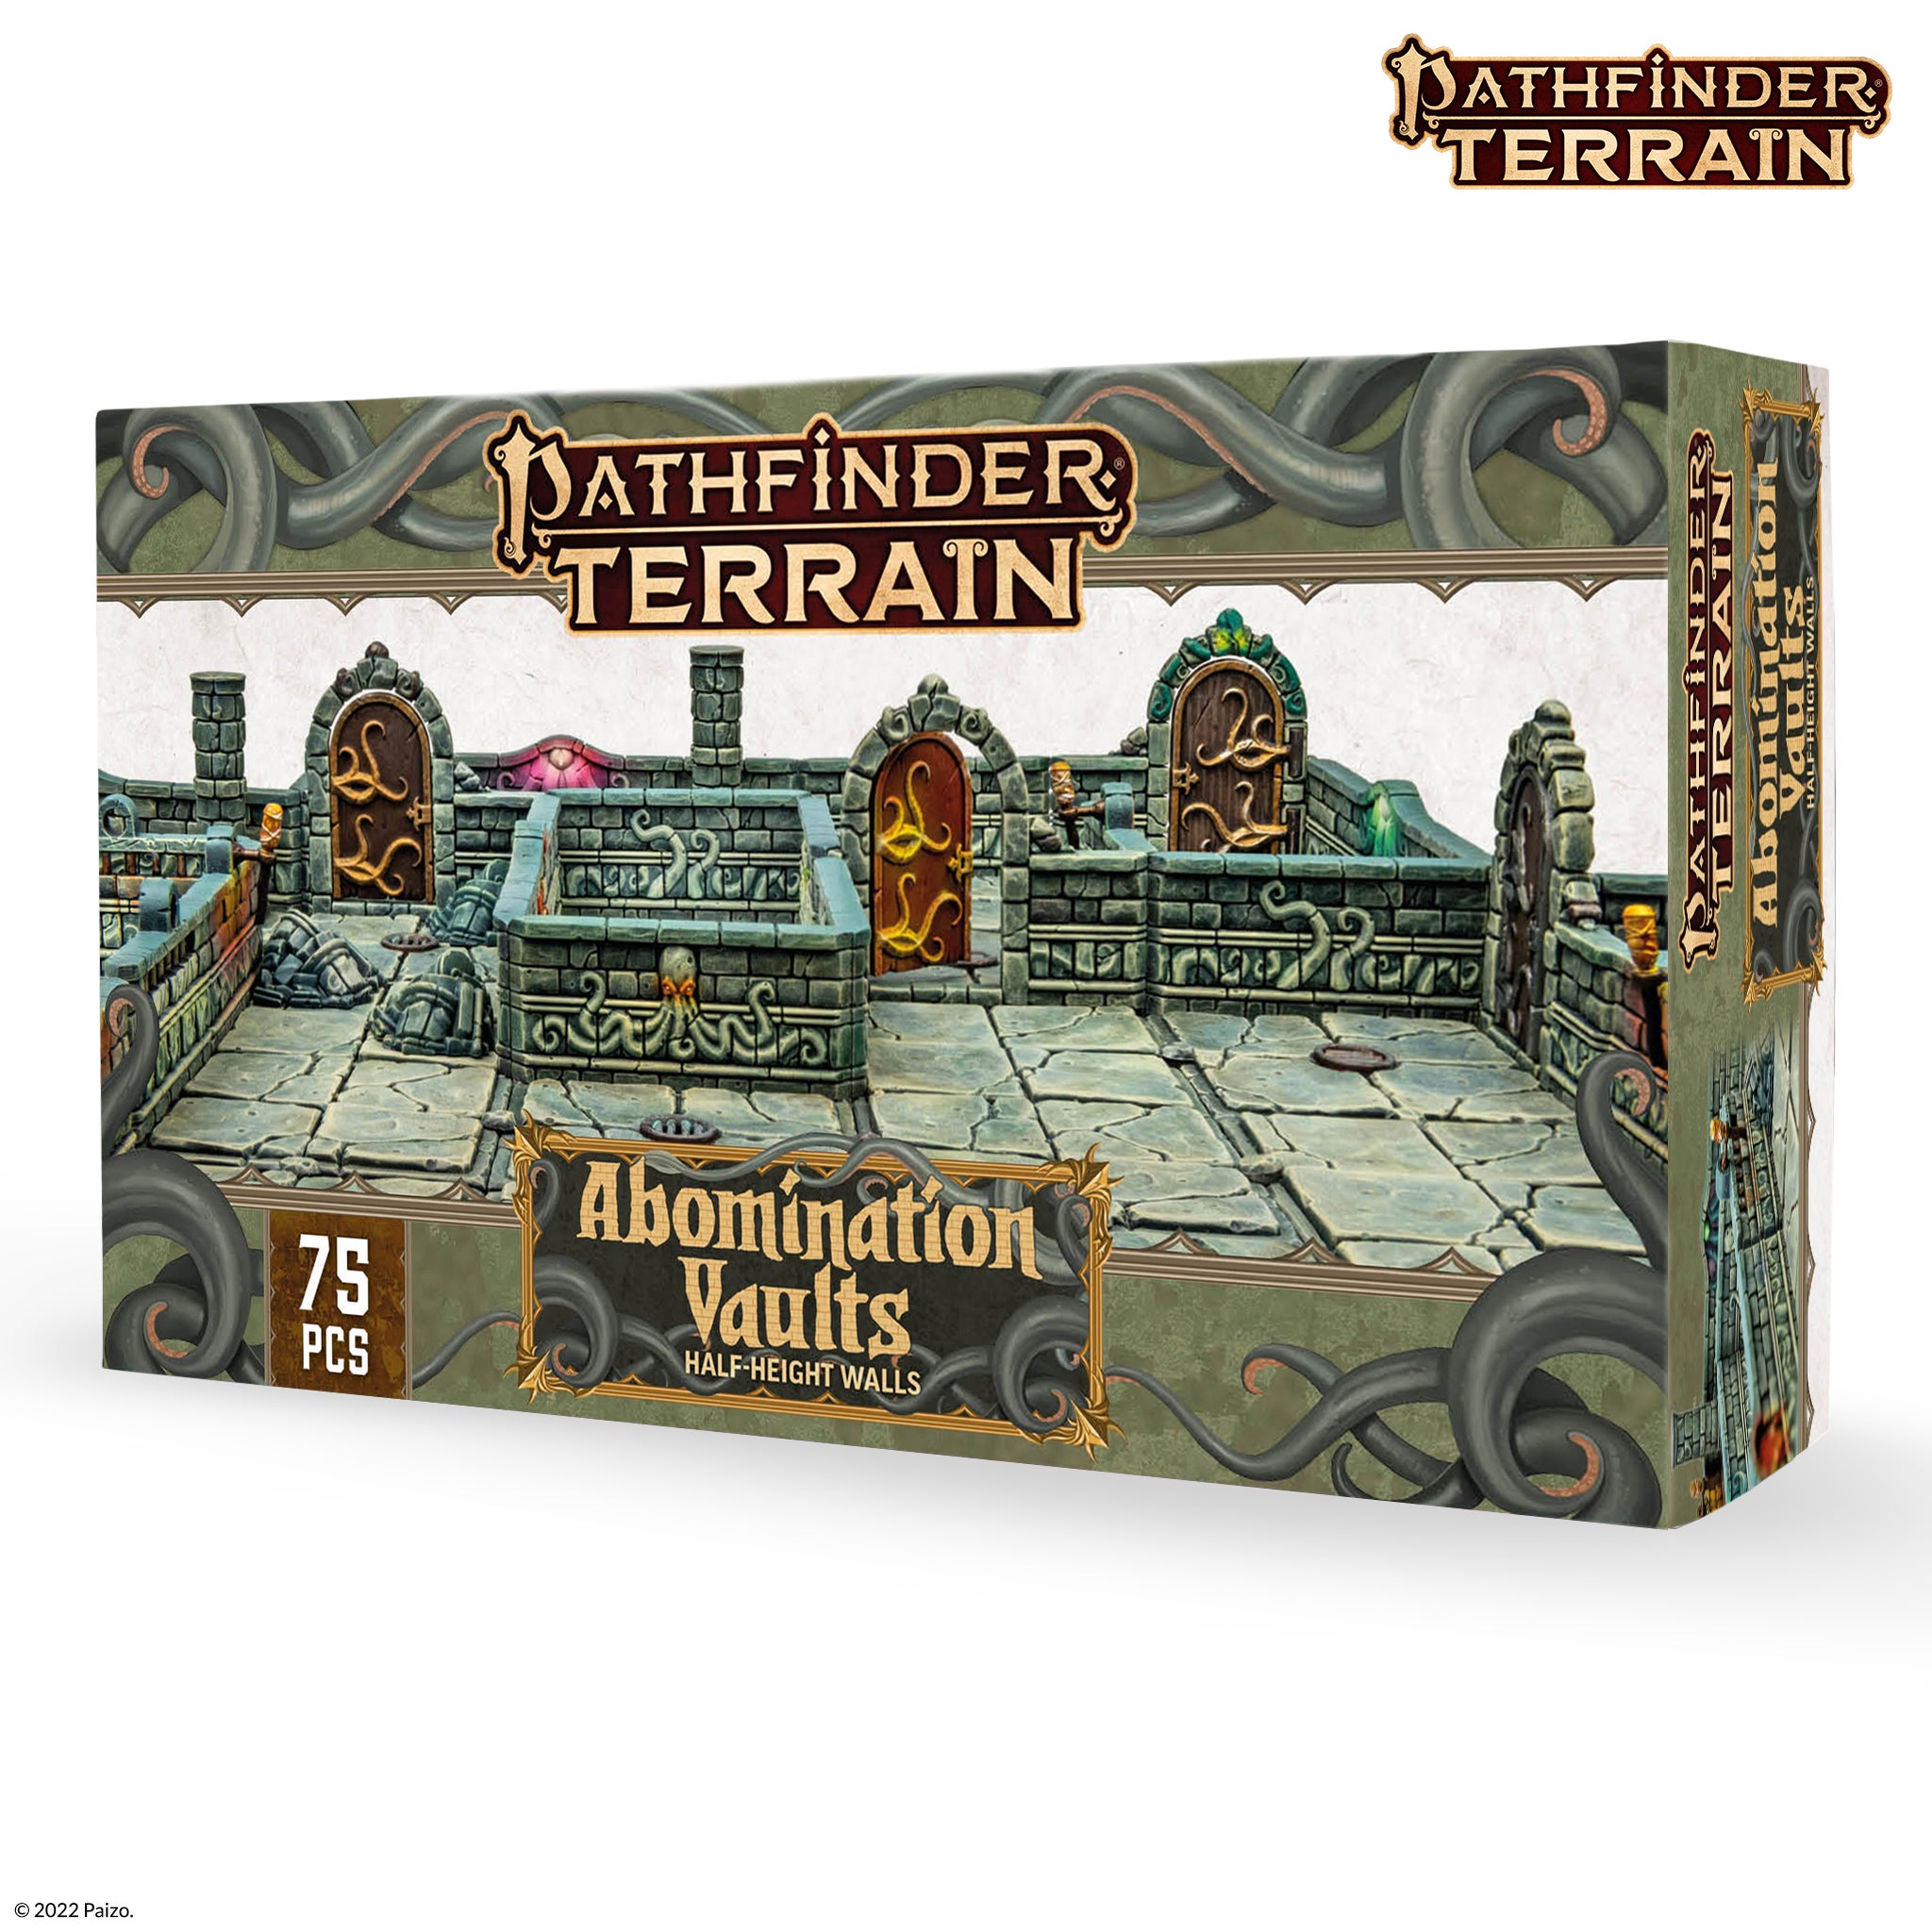 Pathfinder Terrain: Abomination Vaults Half-Height Walls Box Front